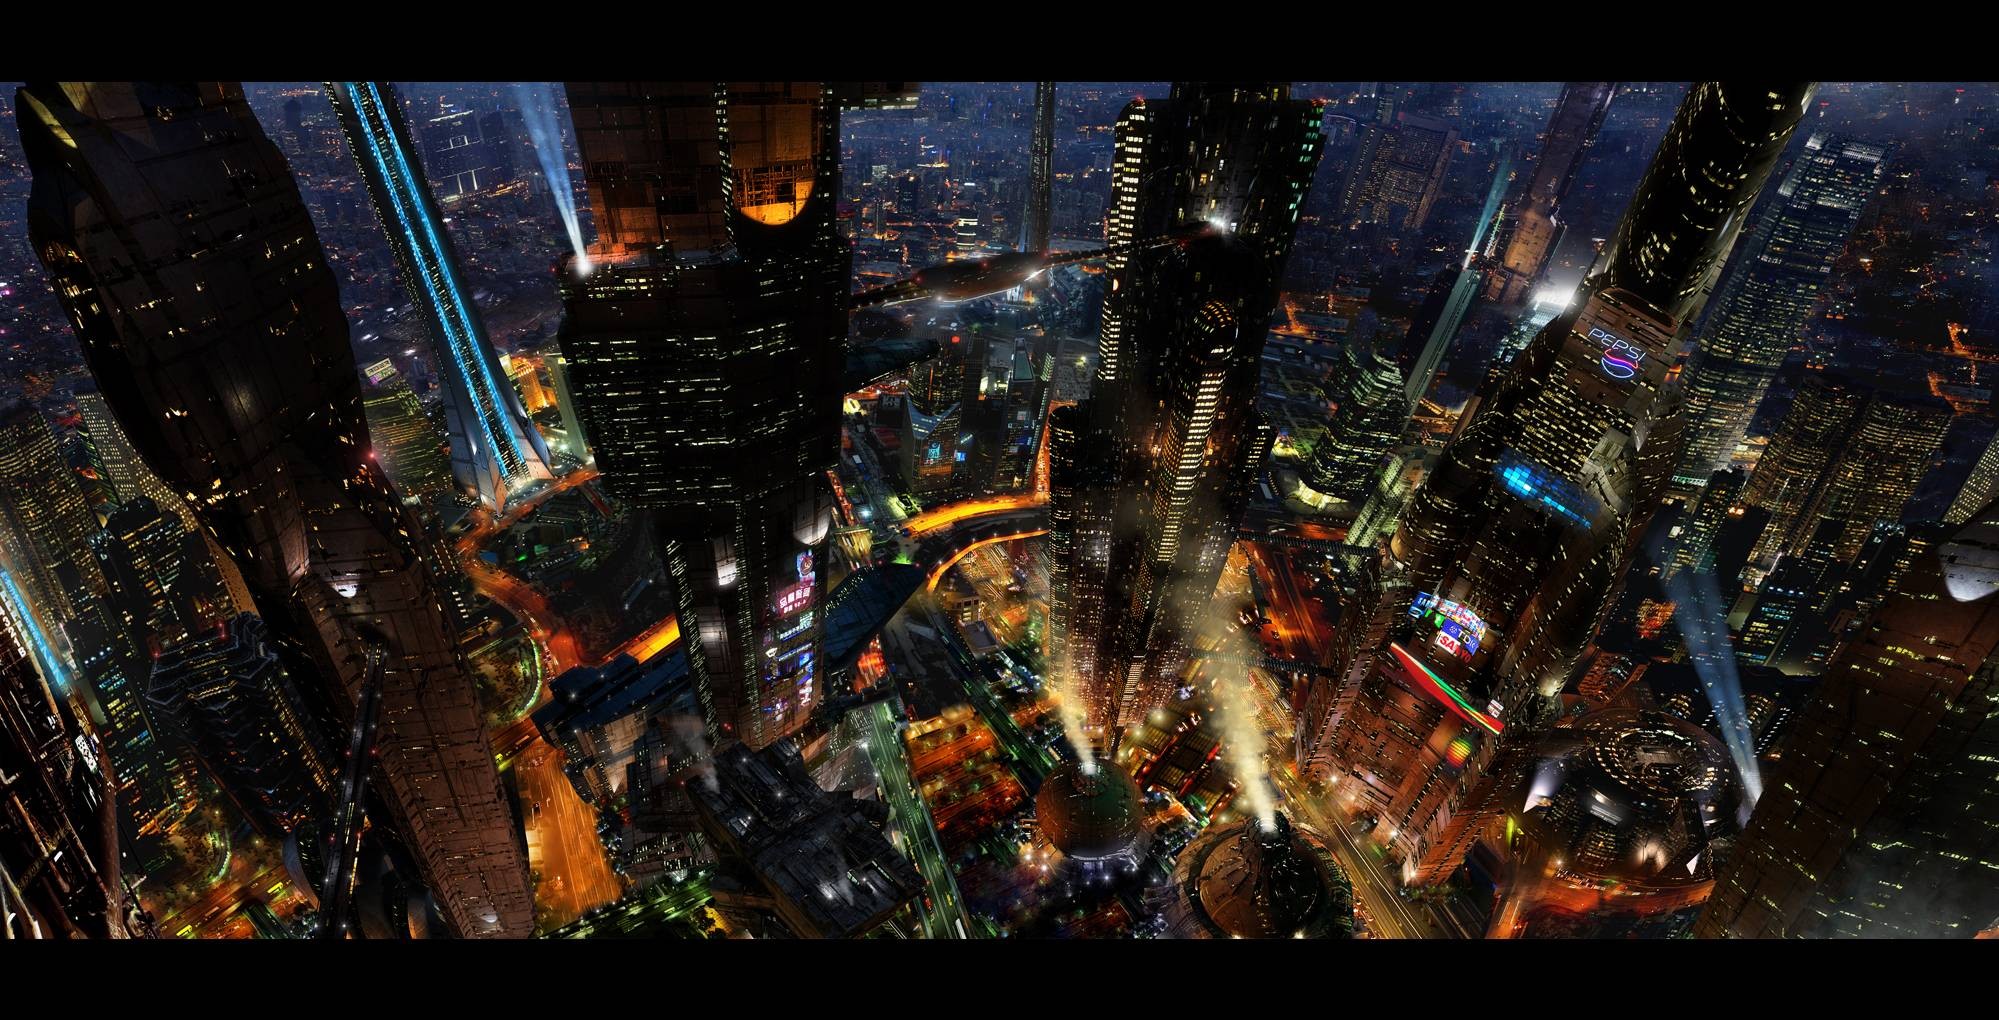 General 1999x1020 cityscape cyberpunk futuristic futuristic city digital art aerial view city lights